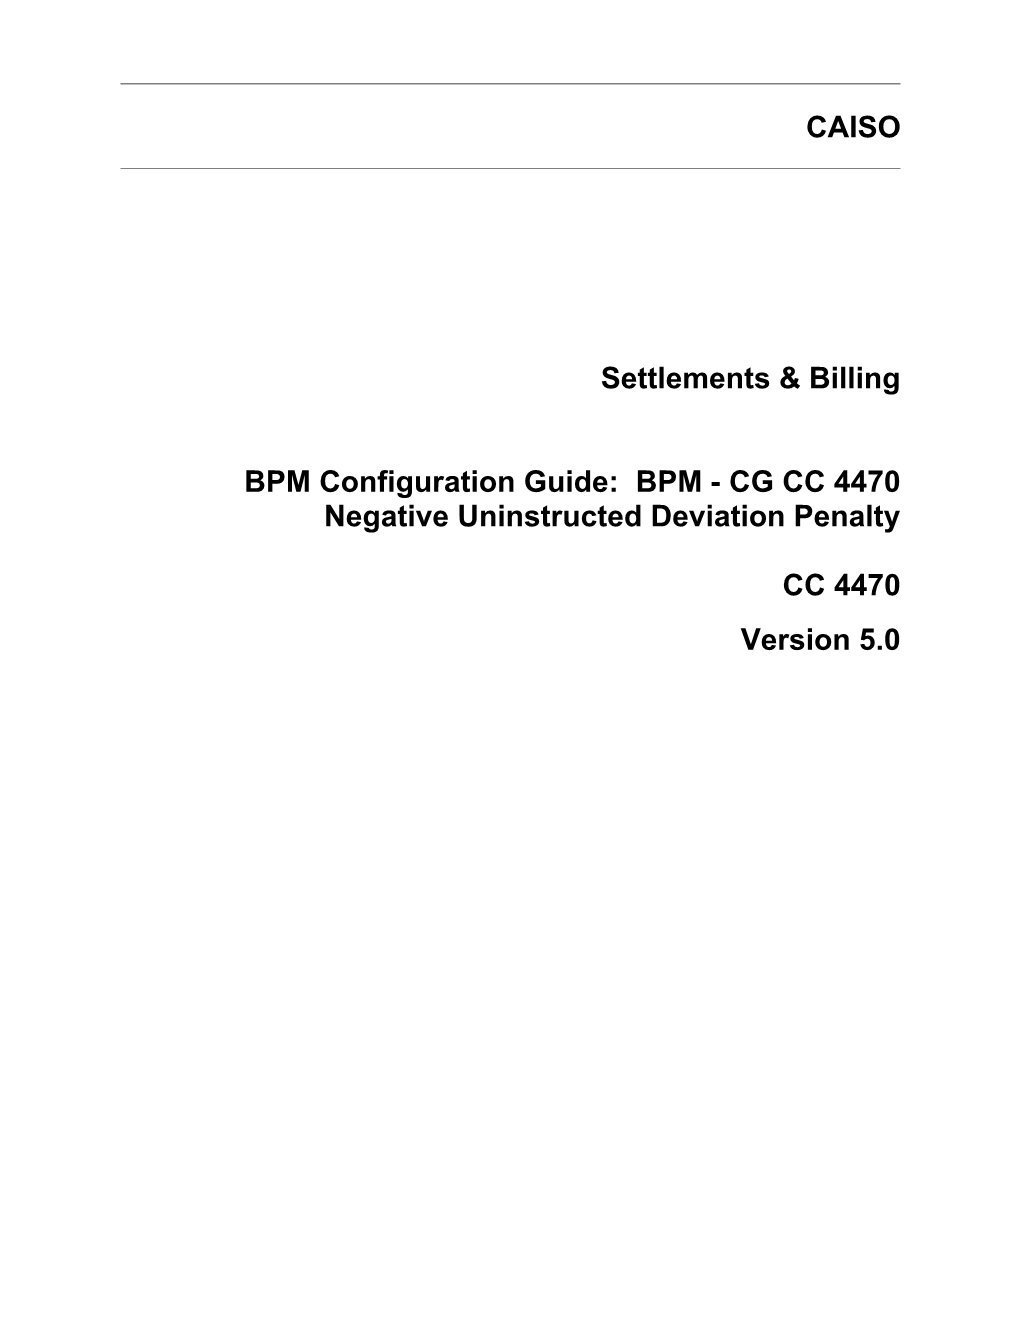 BPM - CG CC 4470 Negative Uninstructed Deviation Penalty